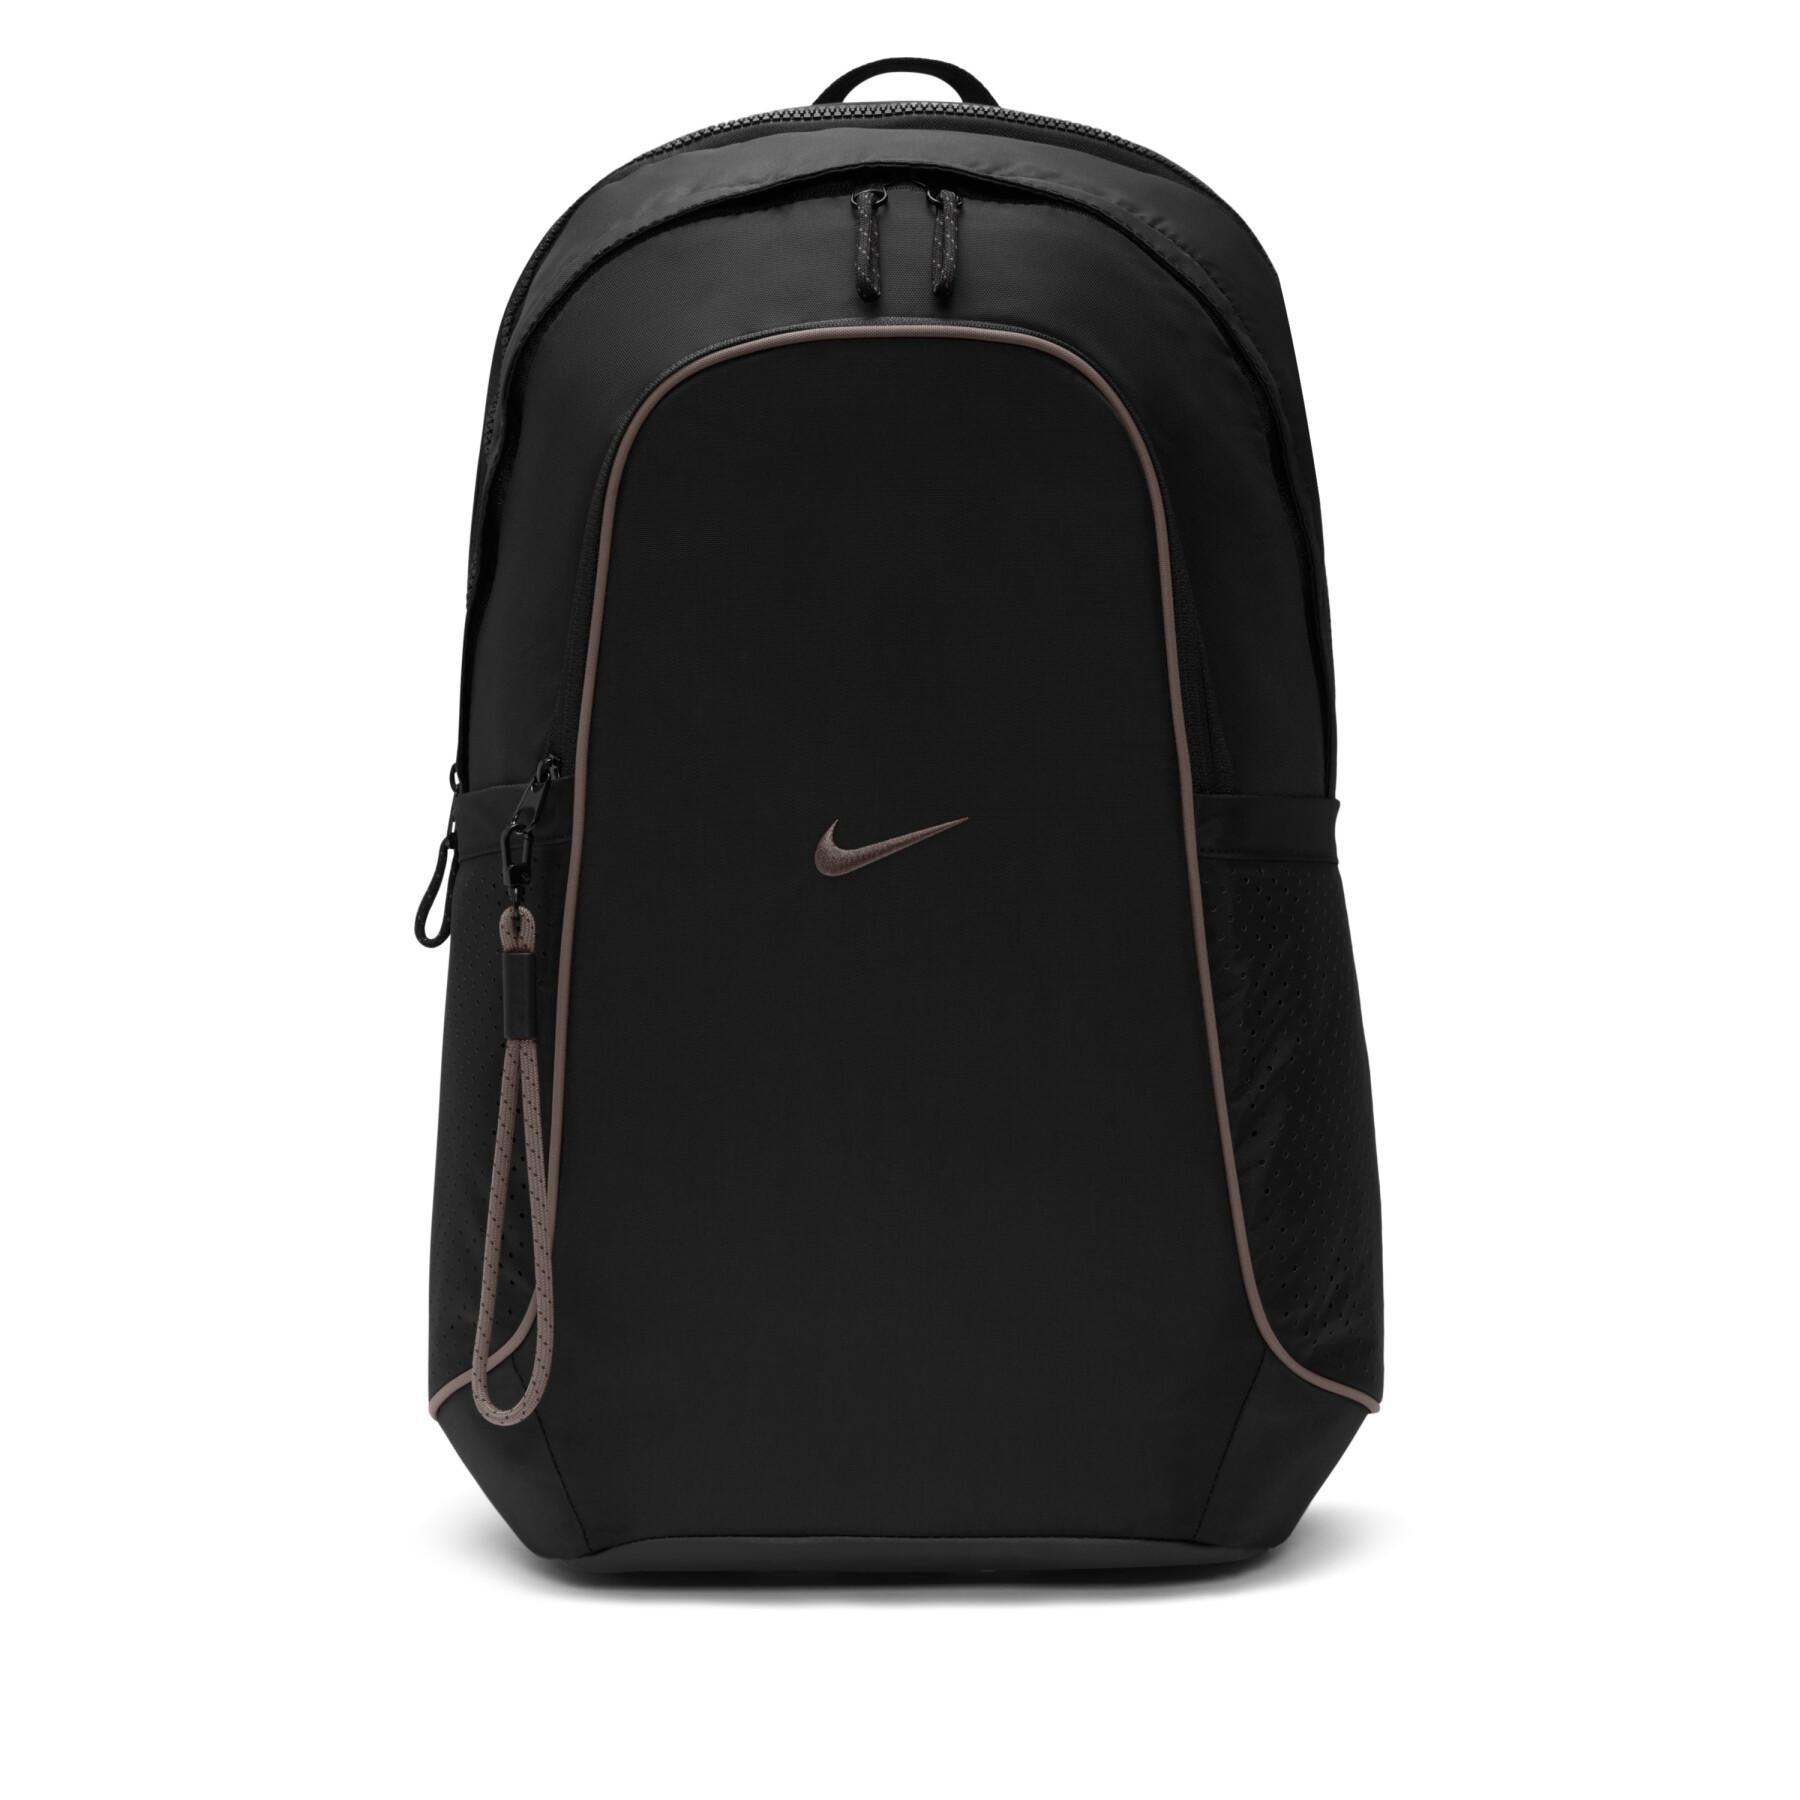 Sac à dos Nike Sportswear Essentials - Nike - Bagagerie de football -  Equipements